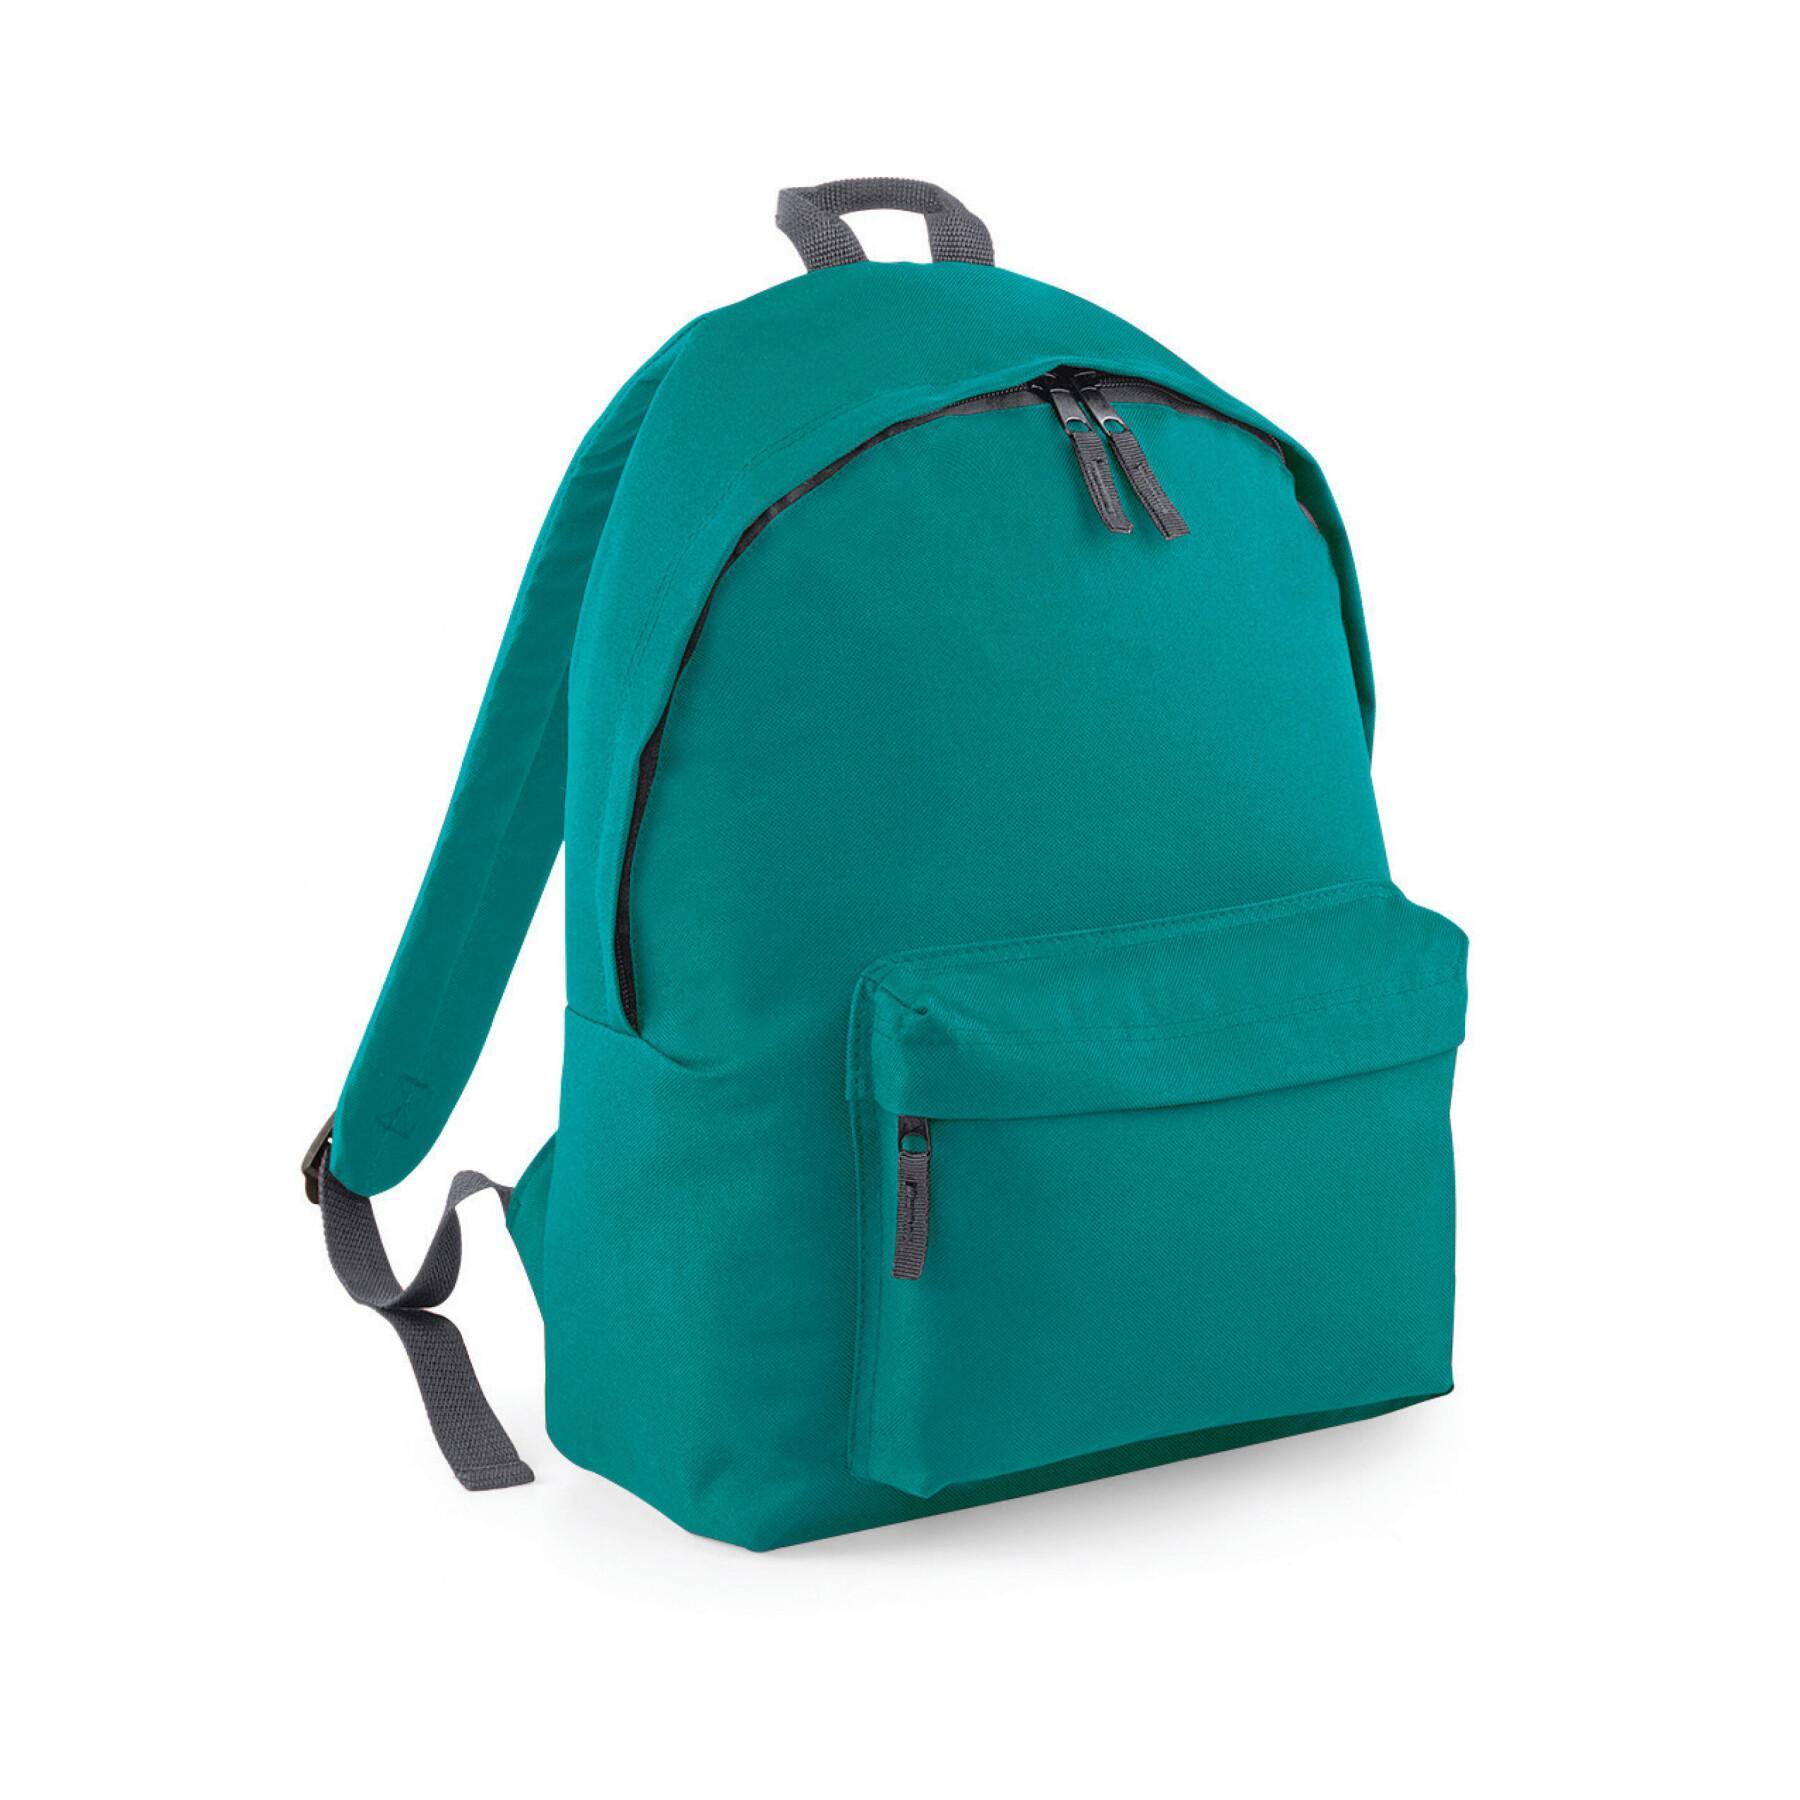 Backpack Bag Base Original Fashion